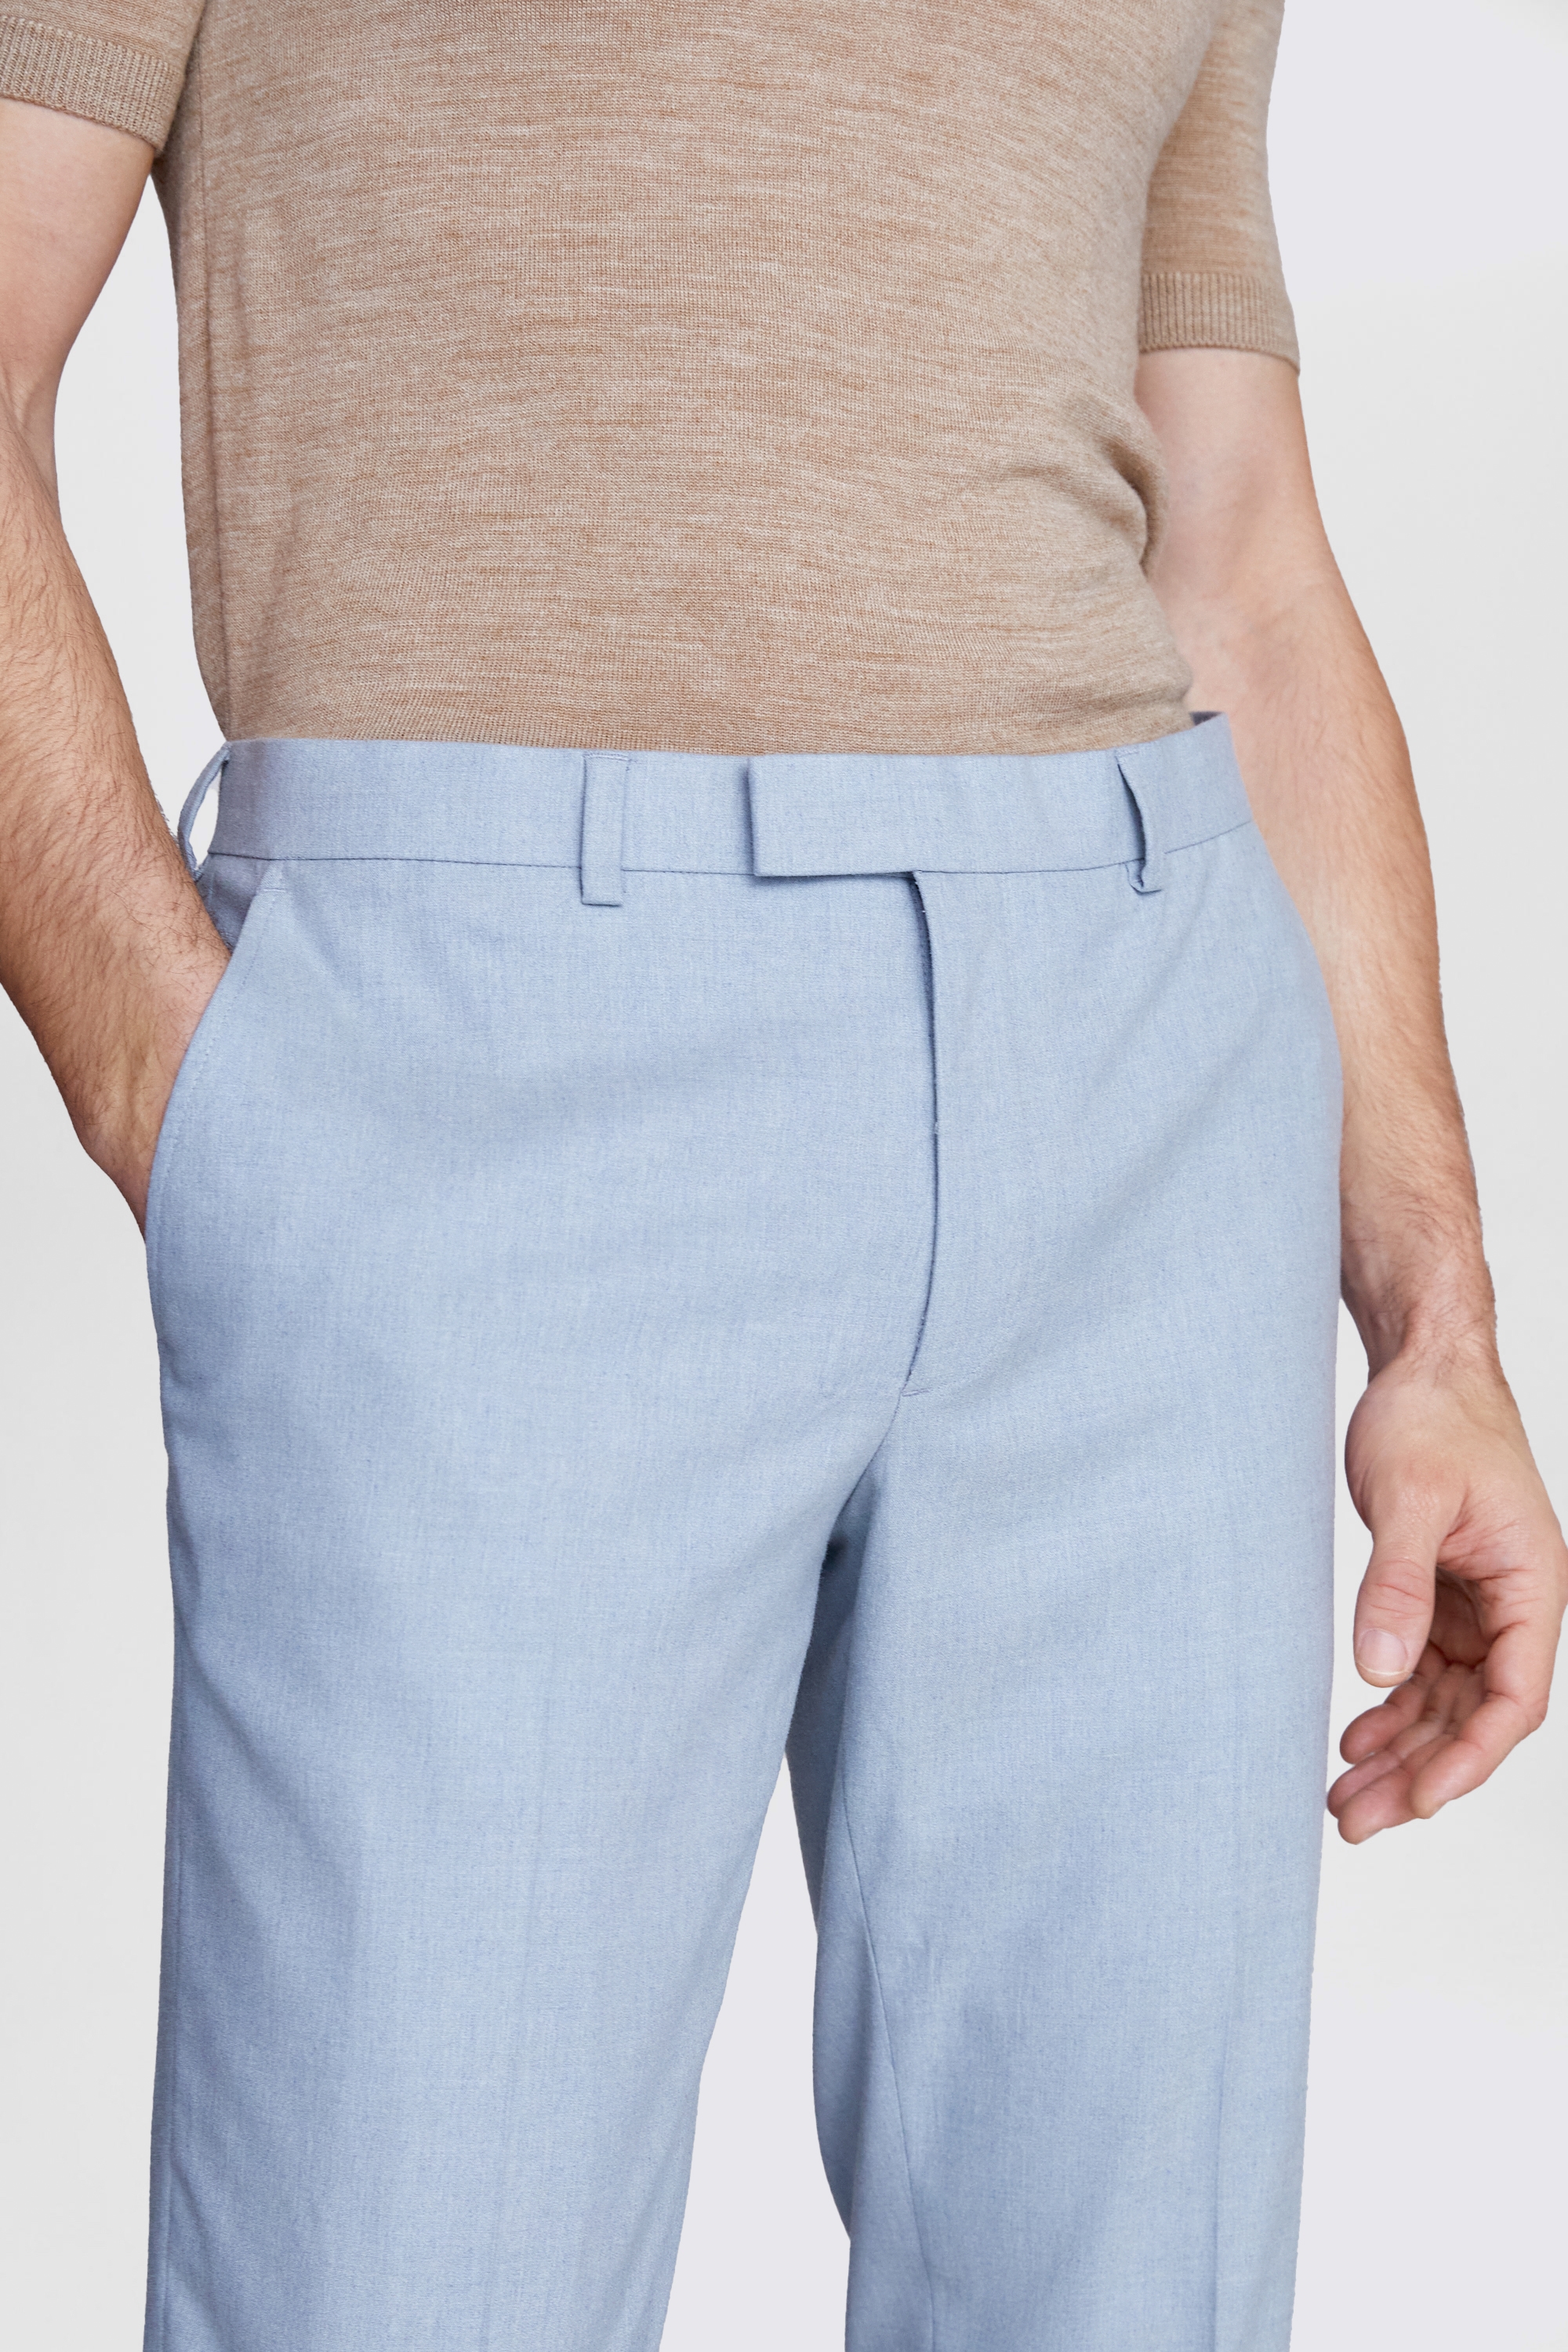 Slim Fit Aqua Trousers | Buy Online at Moss